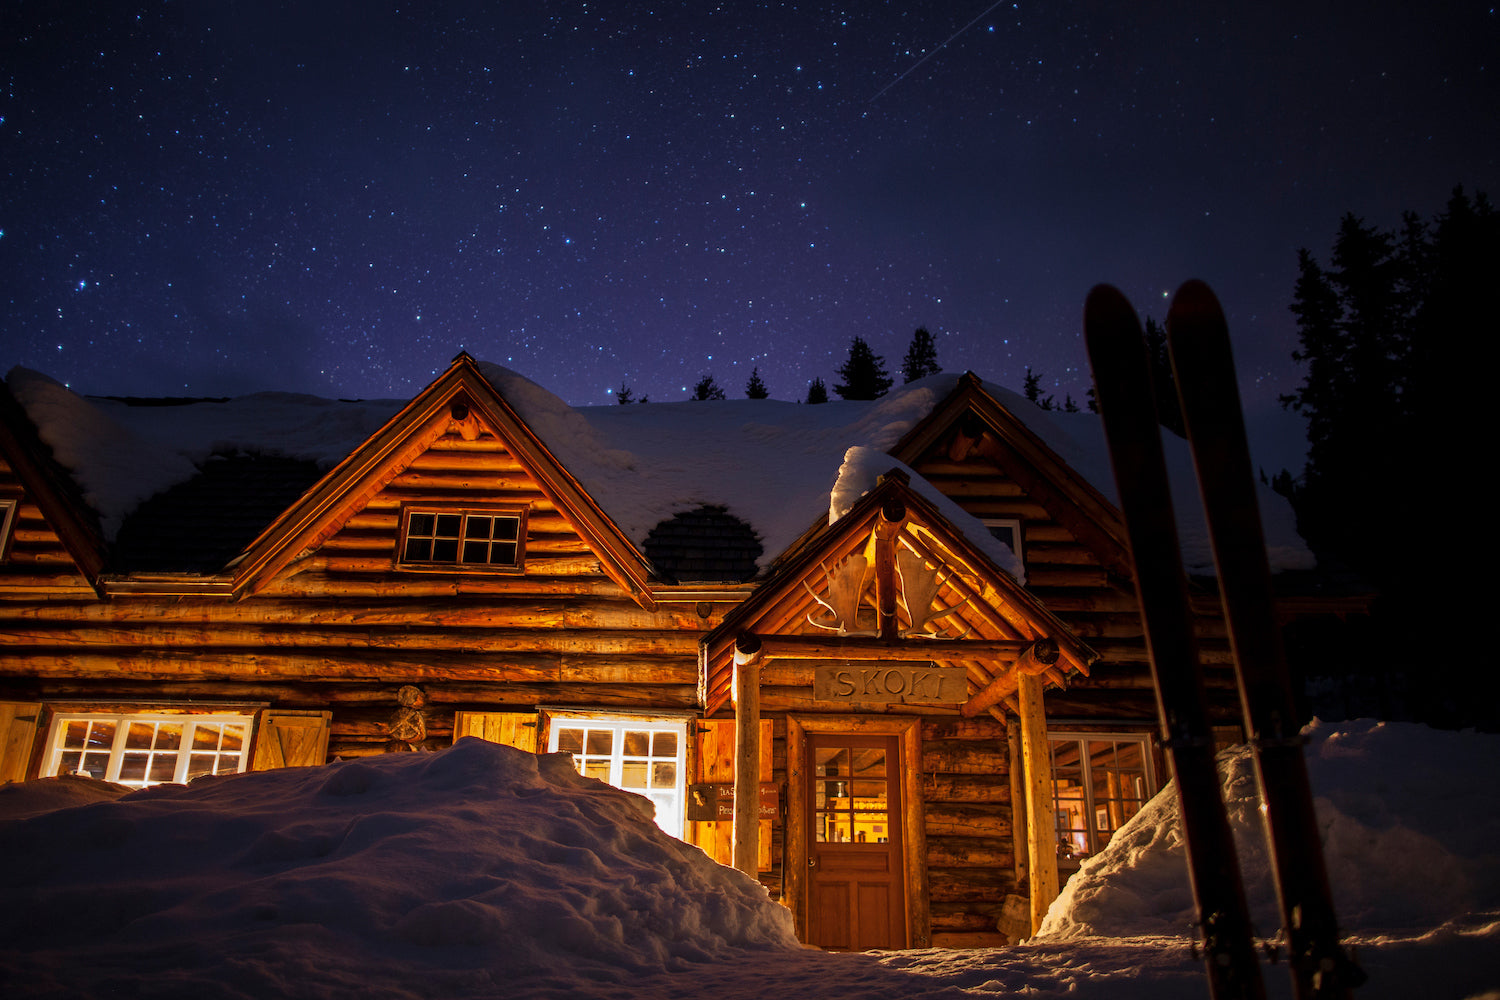 Skoki Starlight (Skoki Lodge)